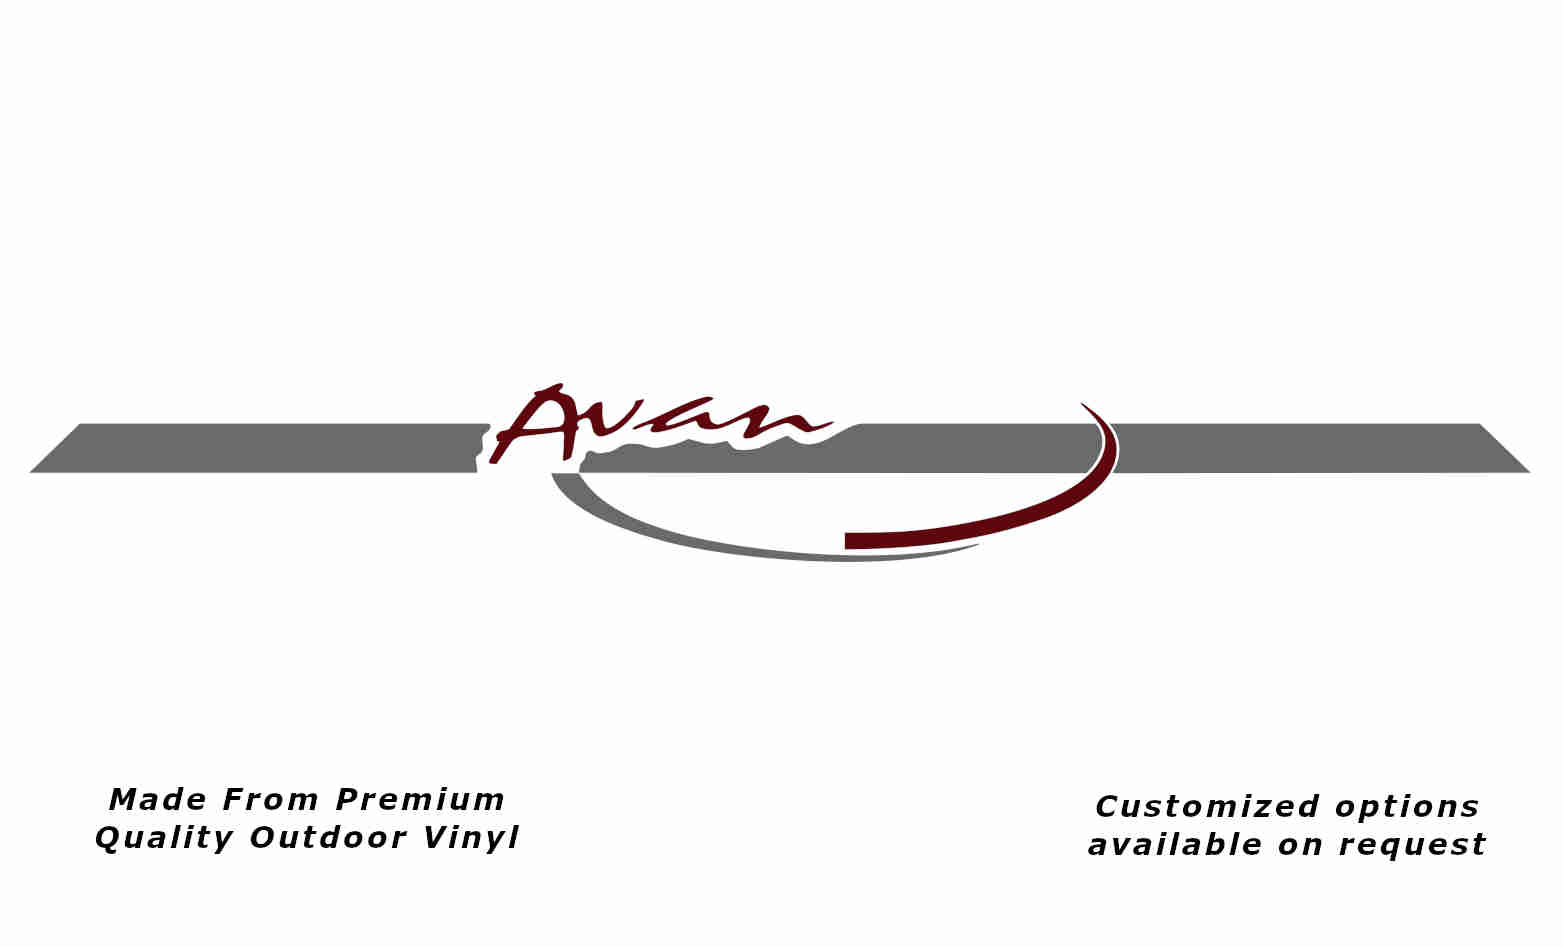 Avan 2004-2011 front caravan replacement vinyl decal sticker in silver grey and purple red.